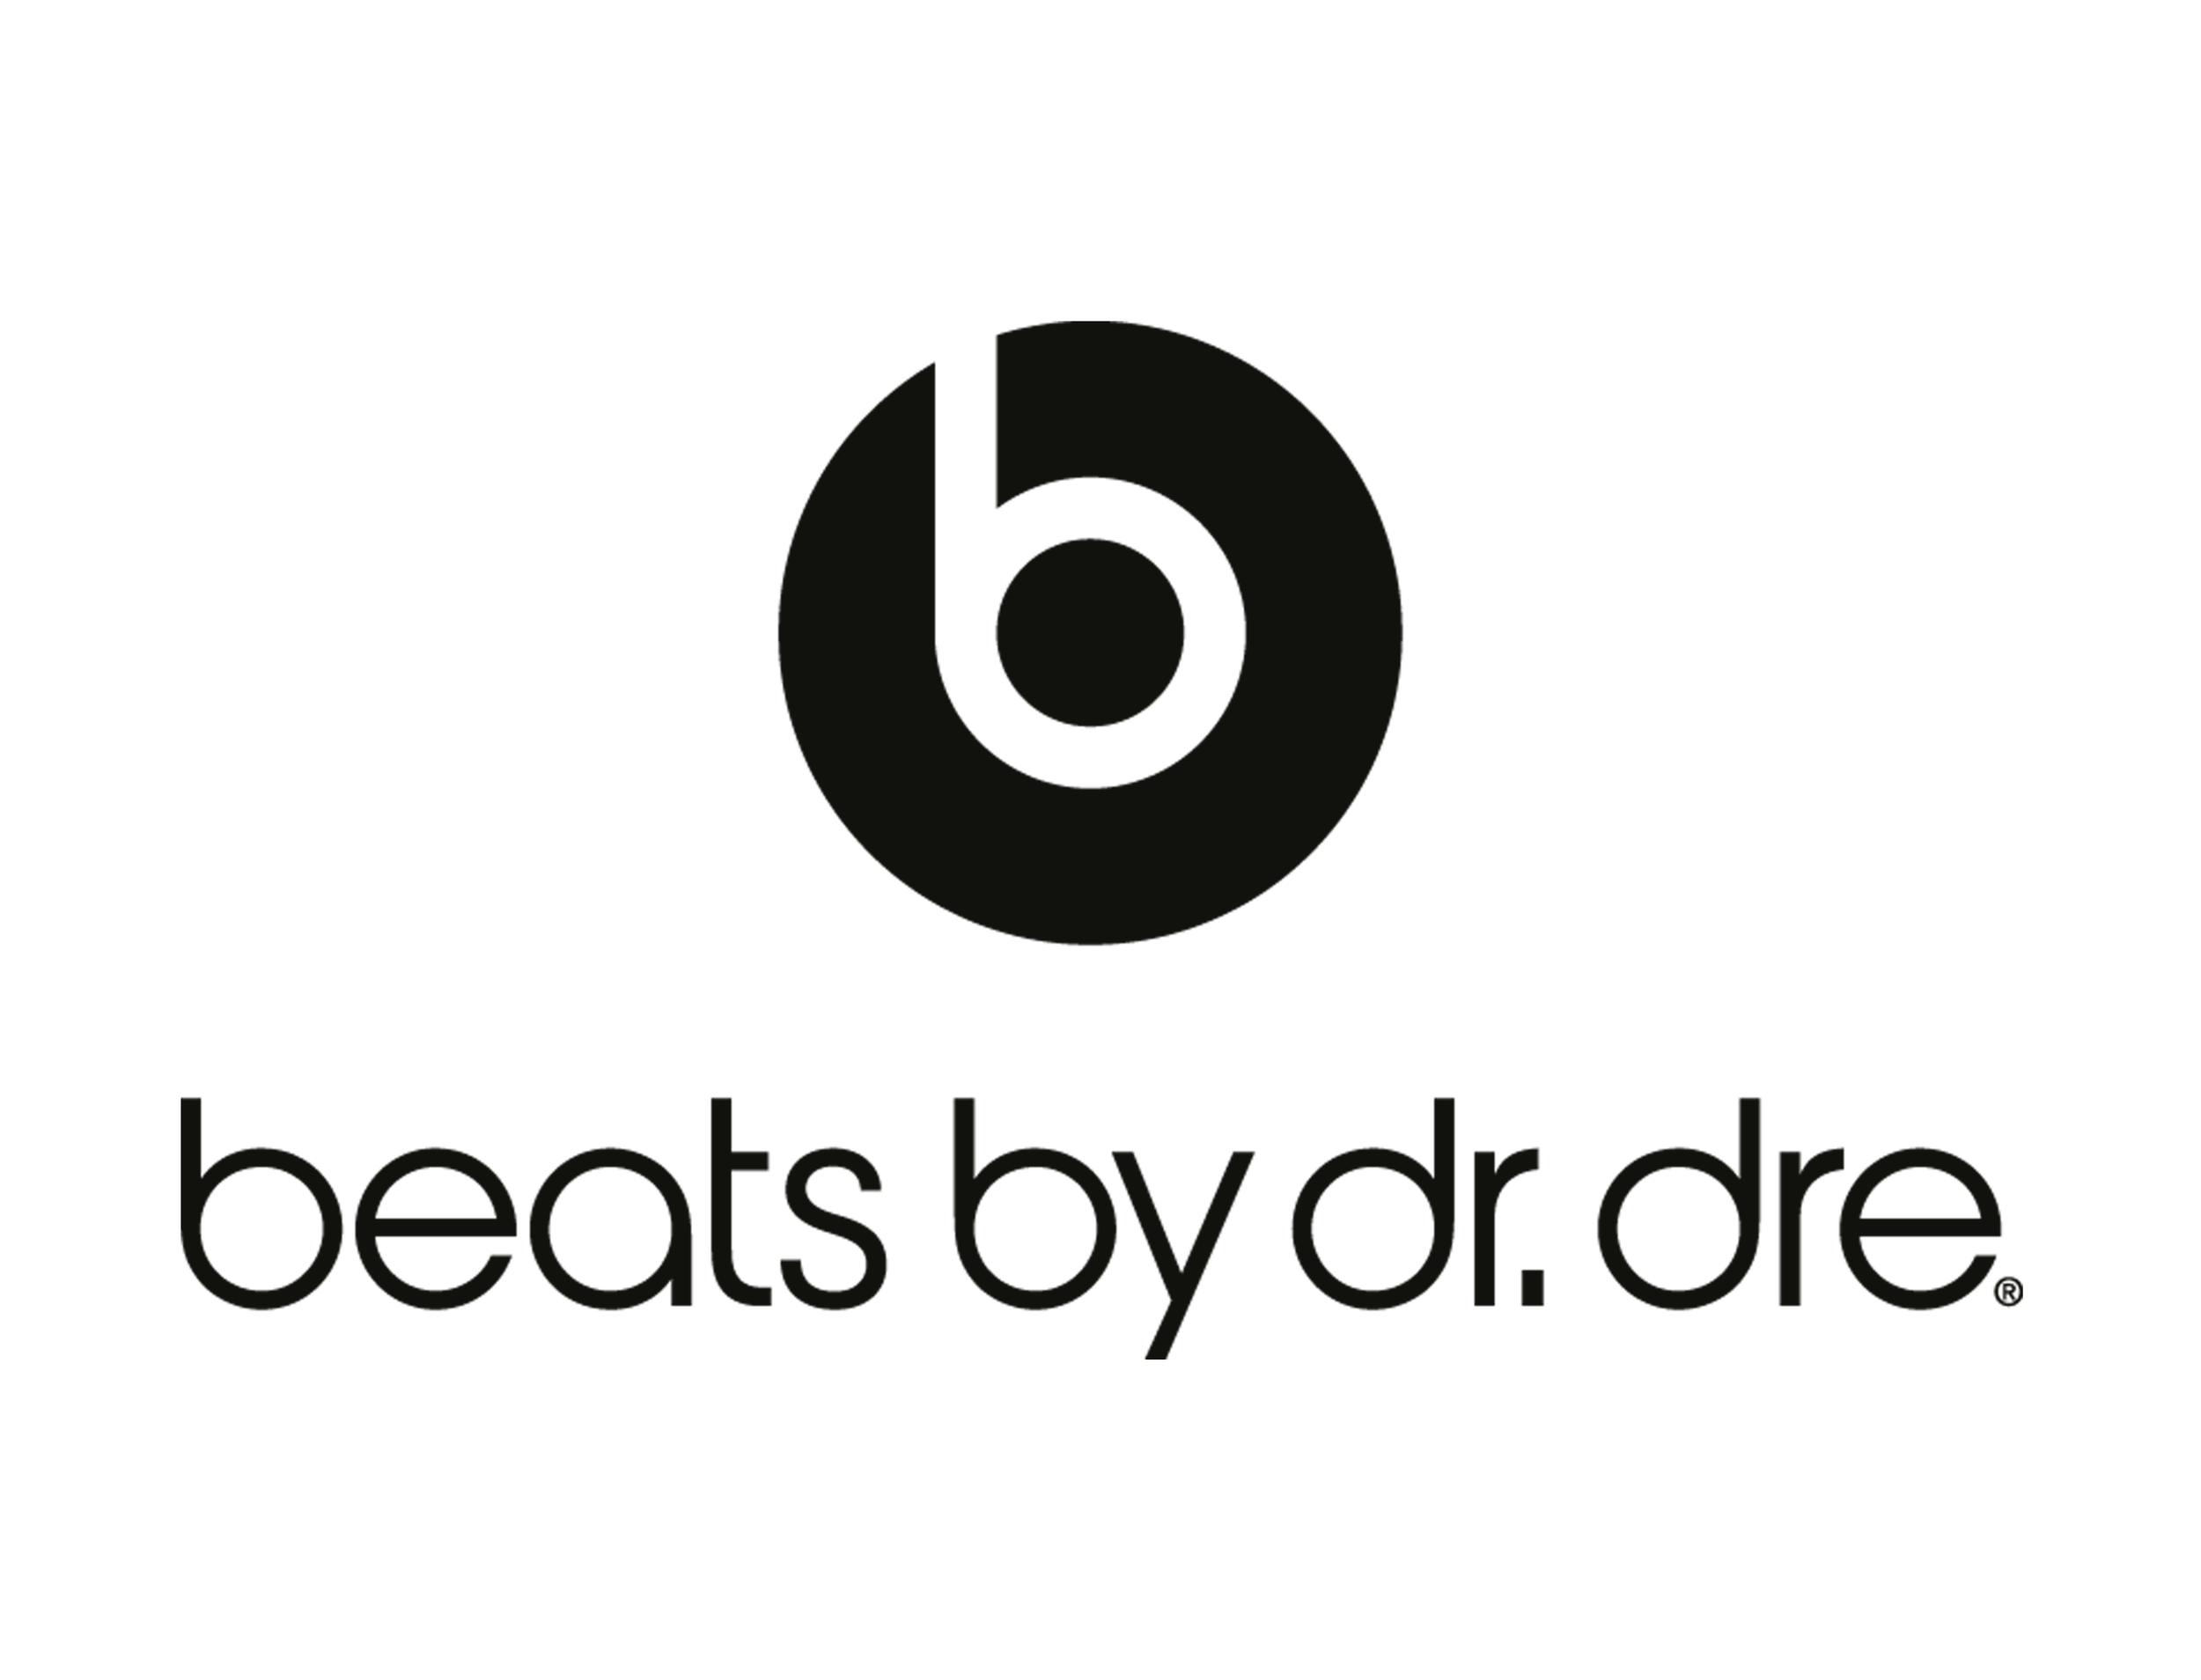 Beats Logo No Background